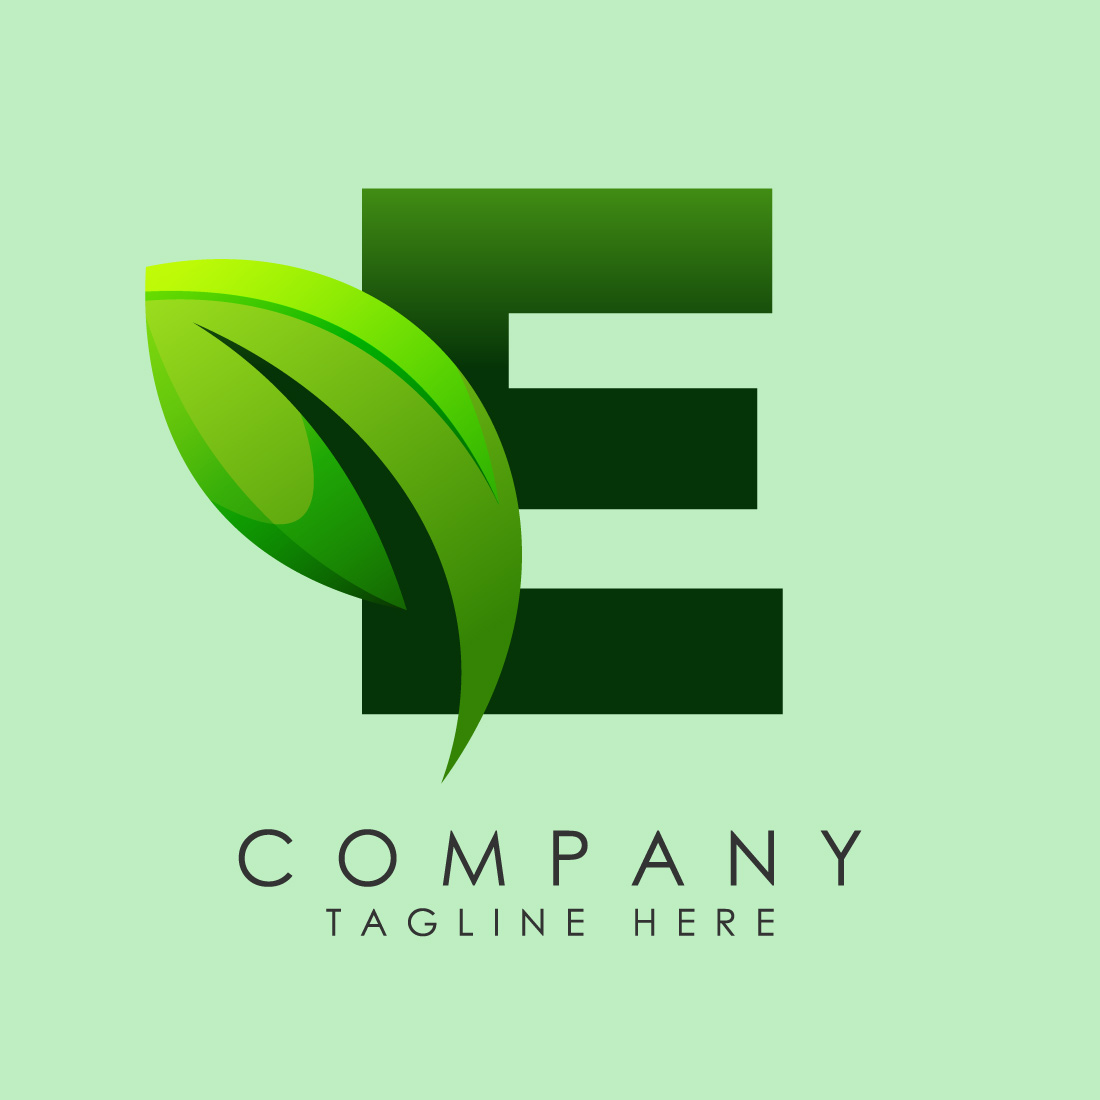 Initial E alphabet with a leaf Eco-friendly logo concept Graphic alphabet symbol for business and company identity preview image.